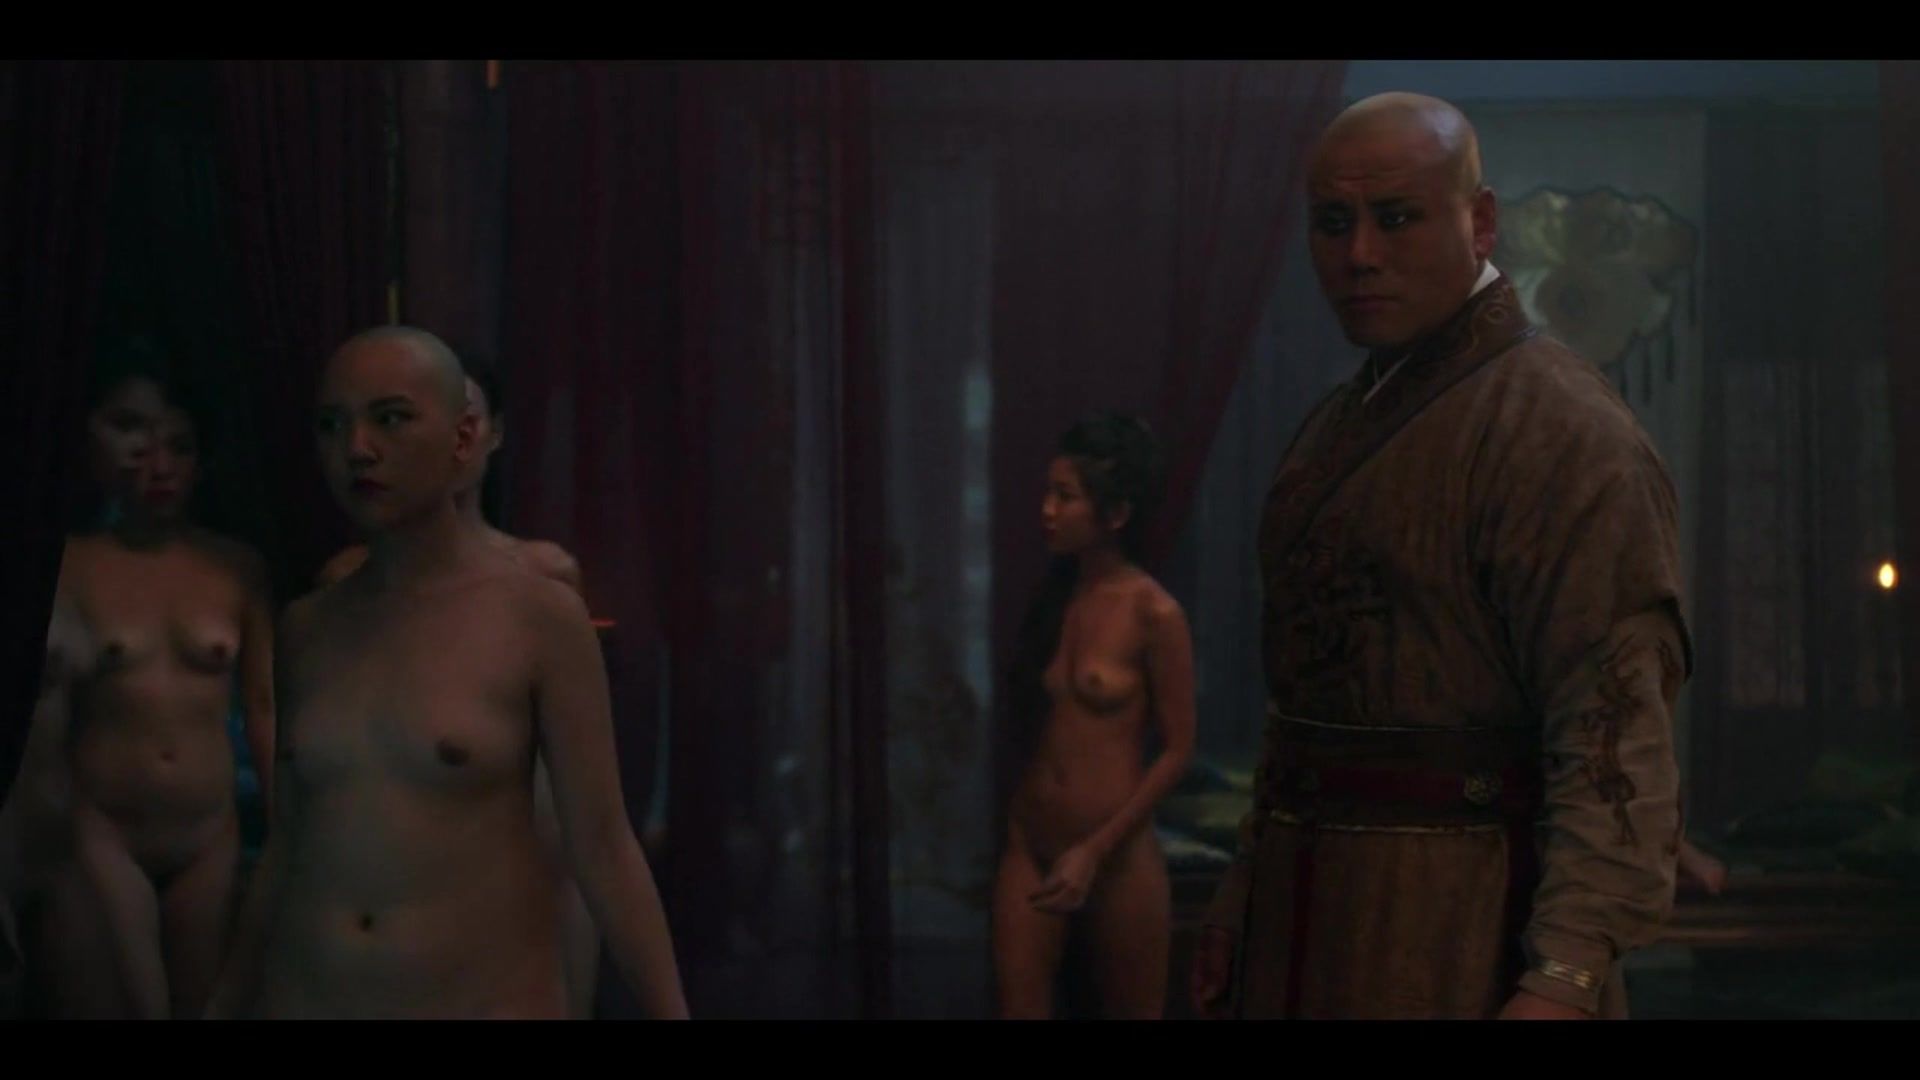 ShowMeMore Joan Chen naked - Marko Polo - 3 - 2014 -2 FreePregnantToons - 1